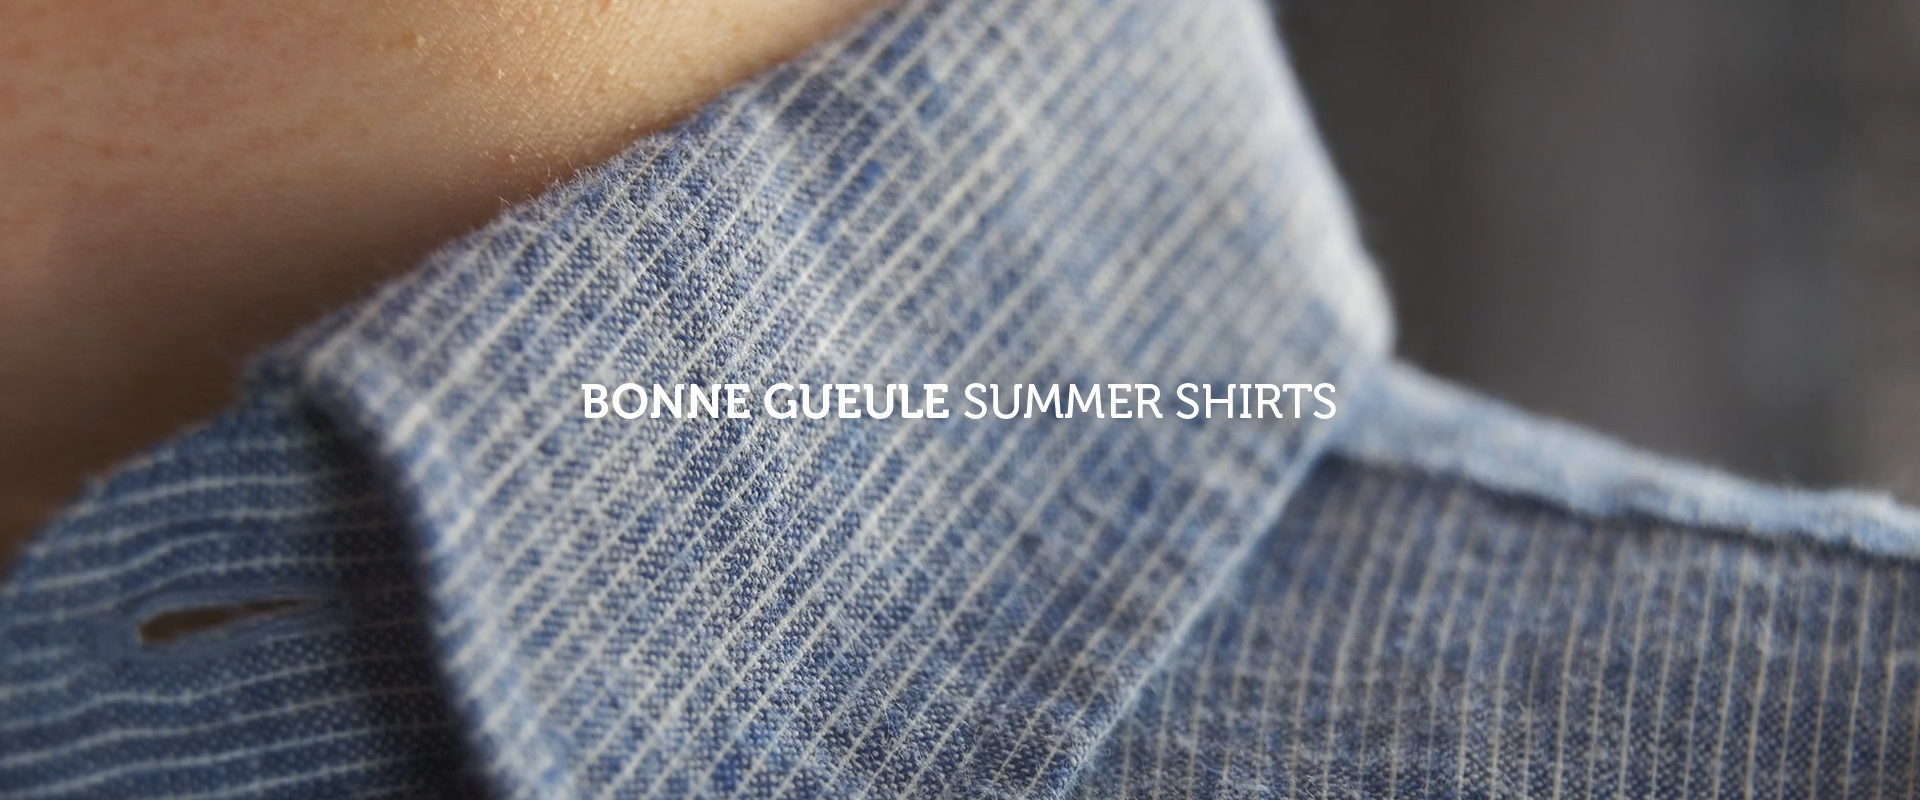 Bonne Gueule Summer Shirts